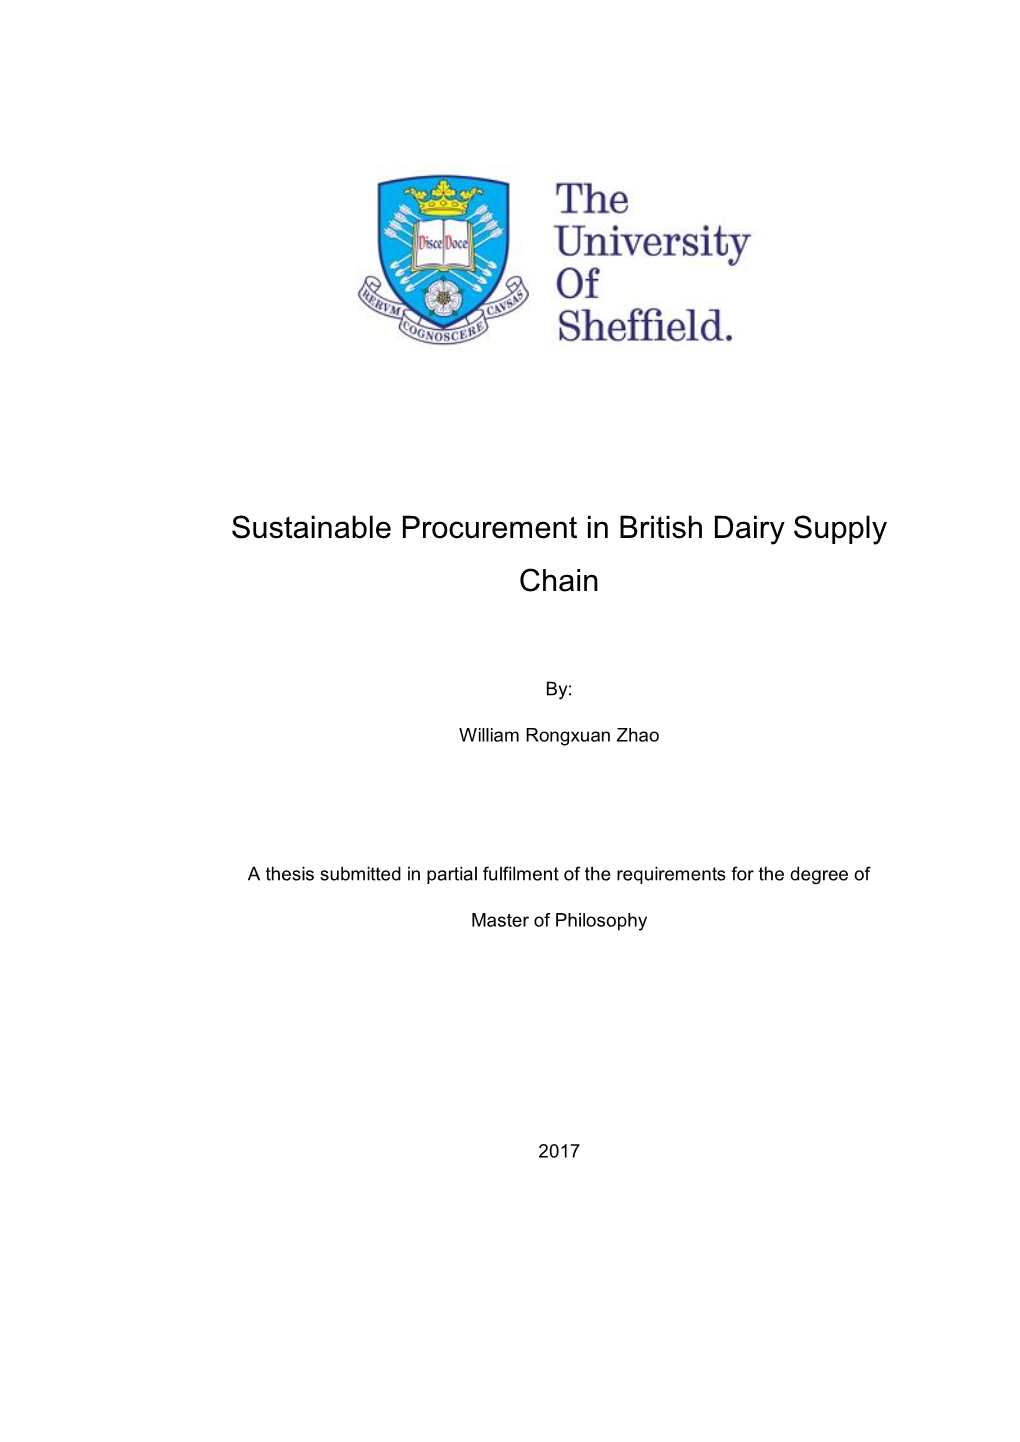 Sustainable Procurement in British Dairy Supply Chain